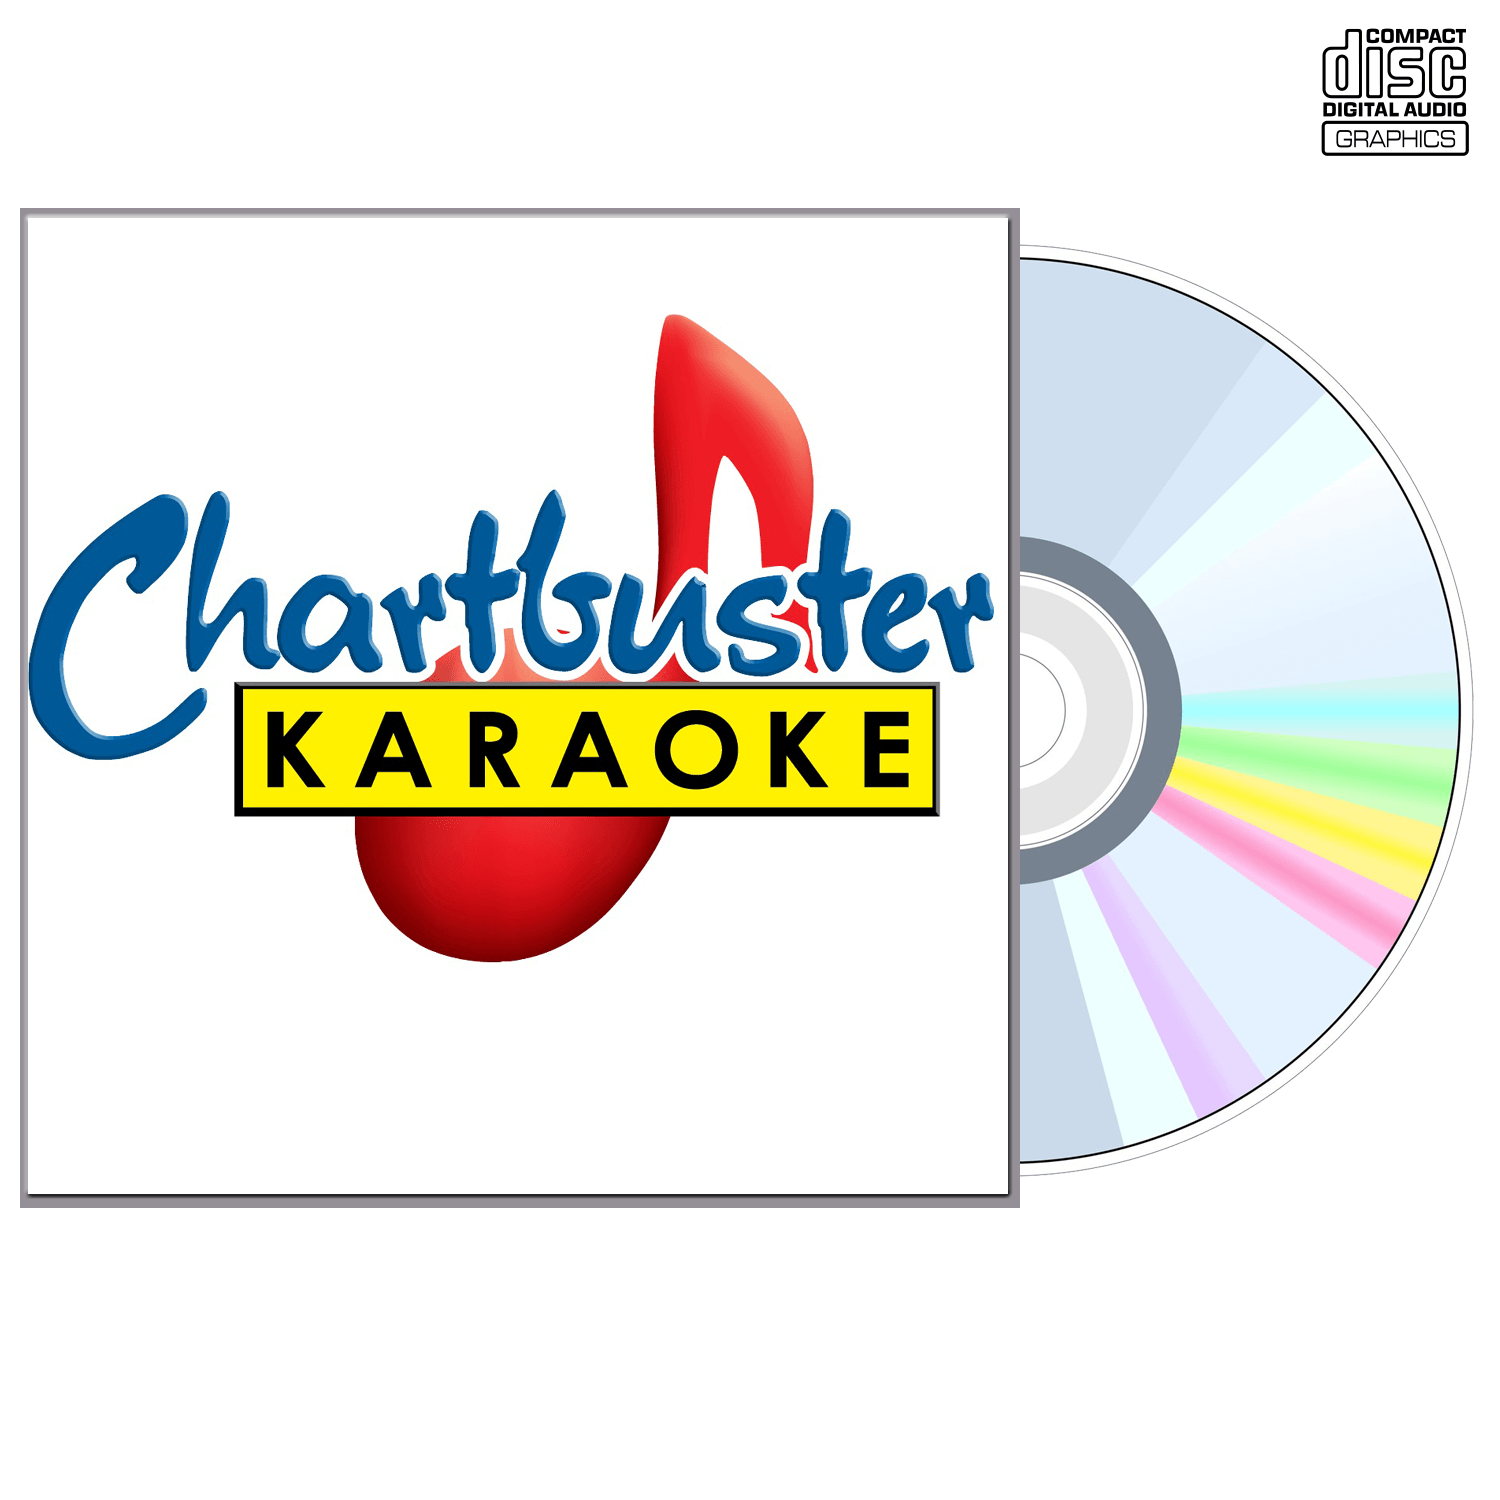 The Wreckers - CD+G - Chartbuster Karaoke - Karaoke Home Entertainment